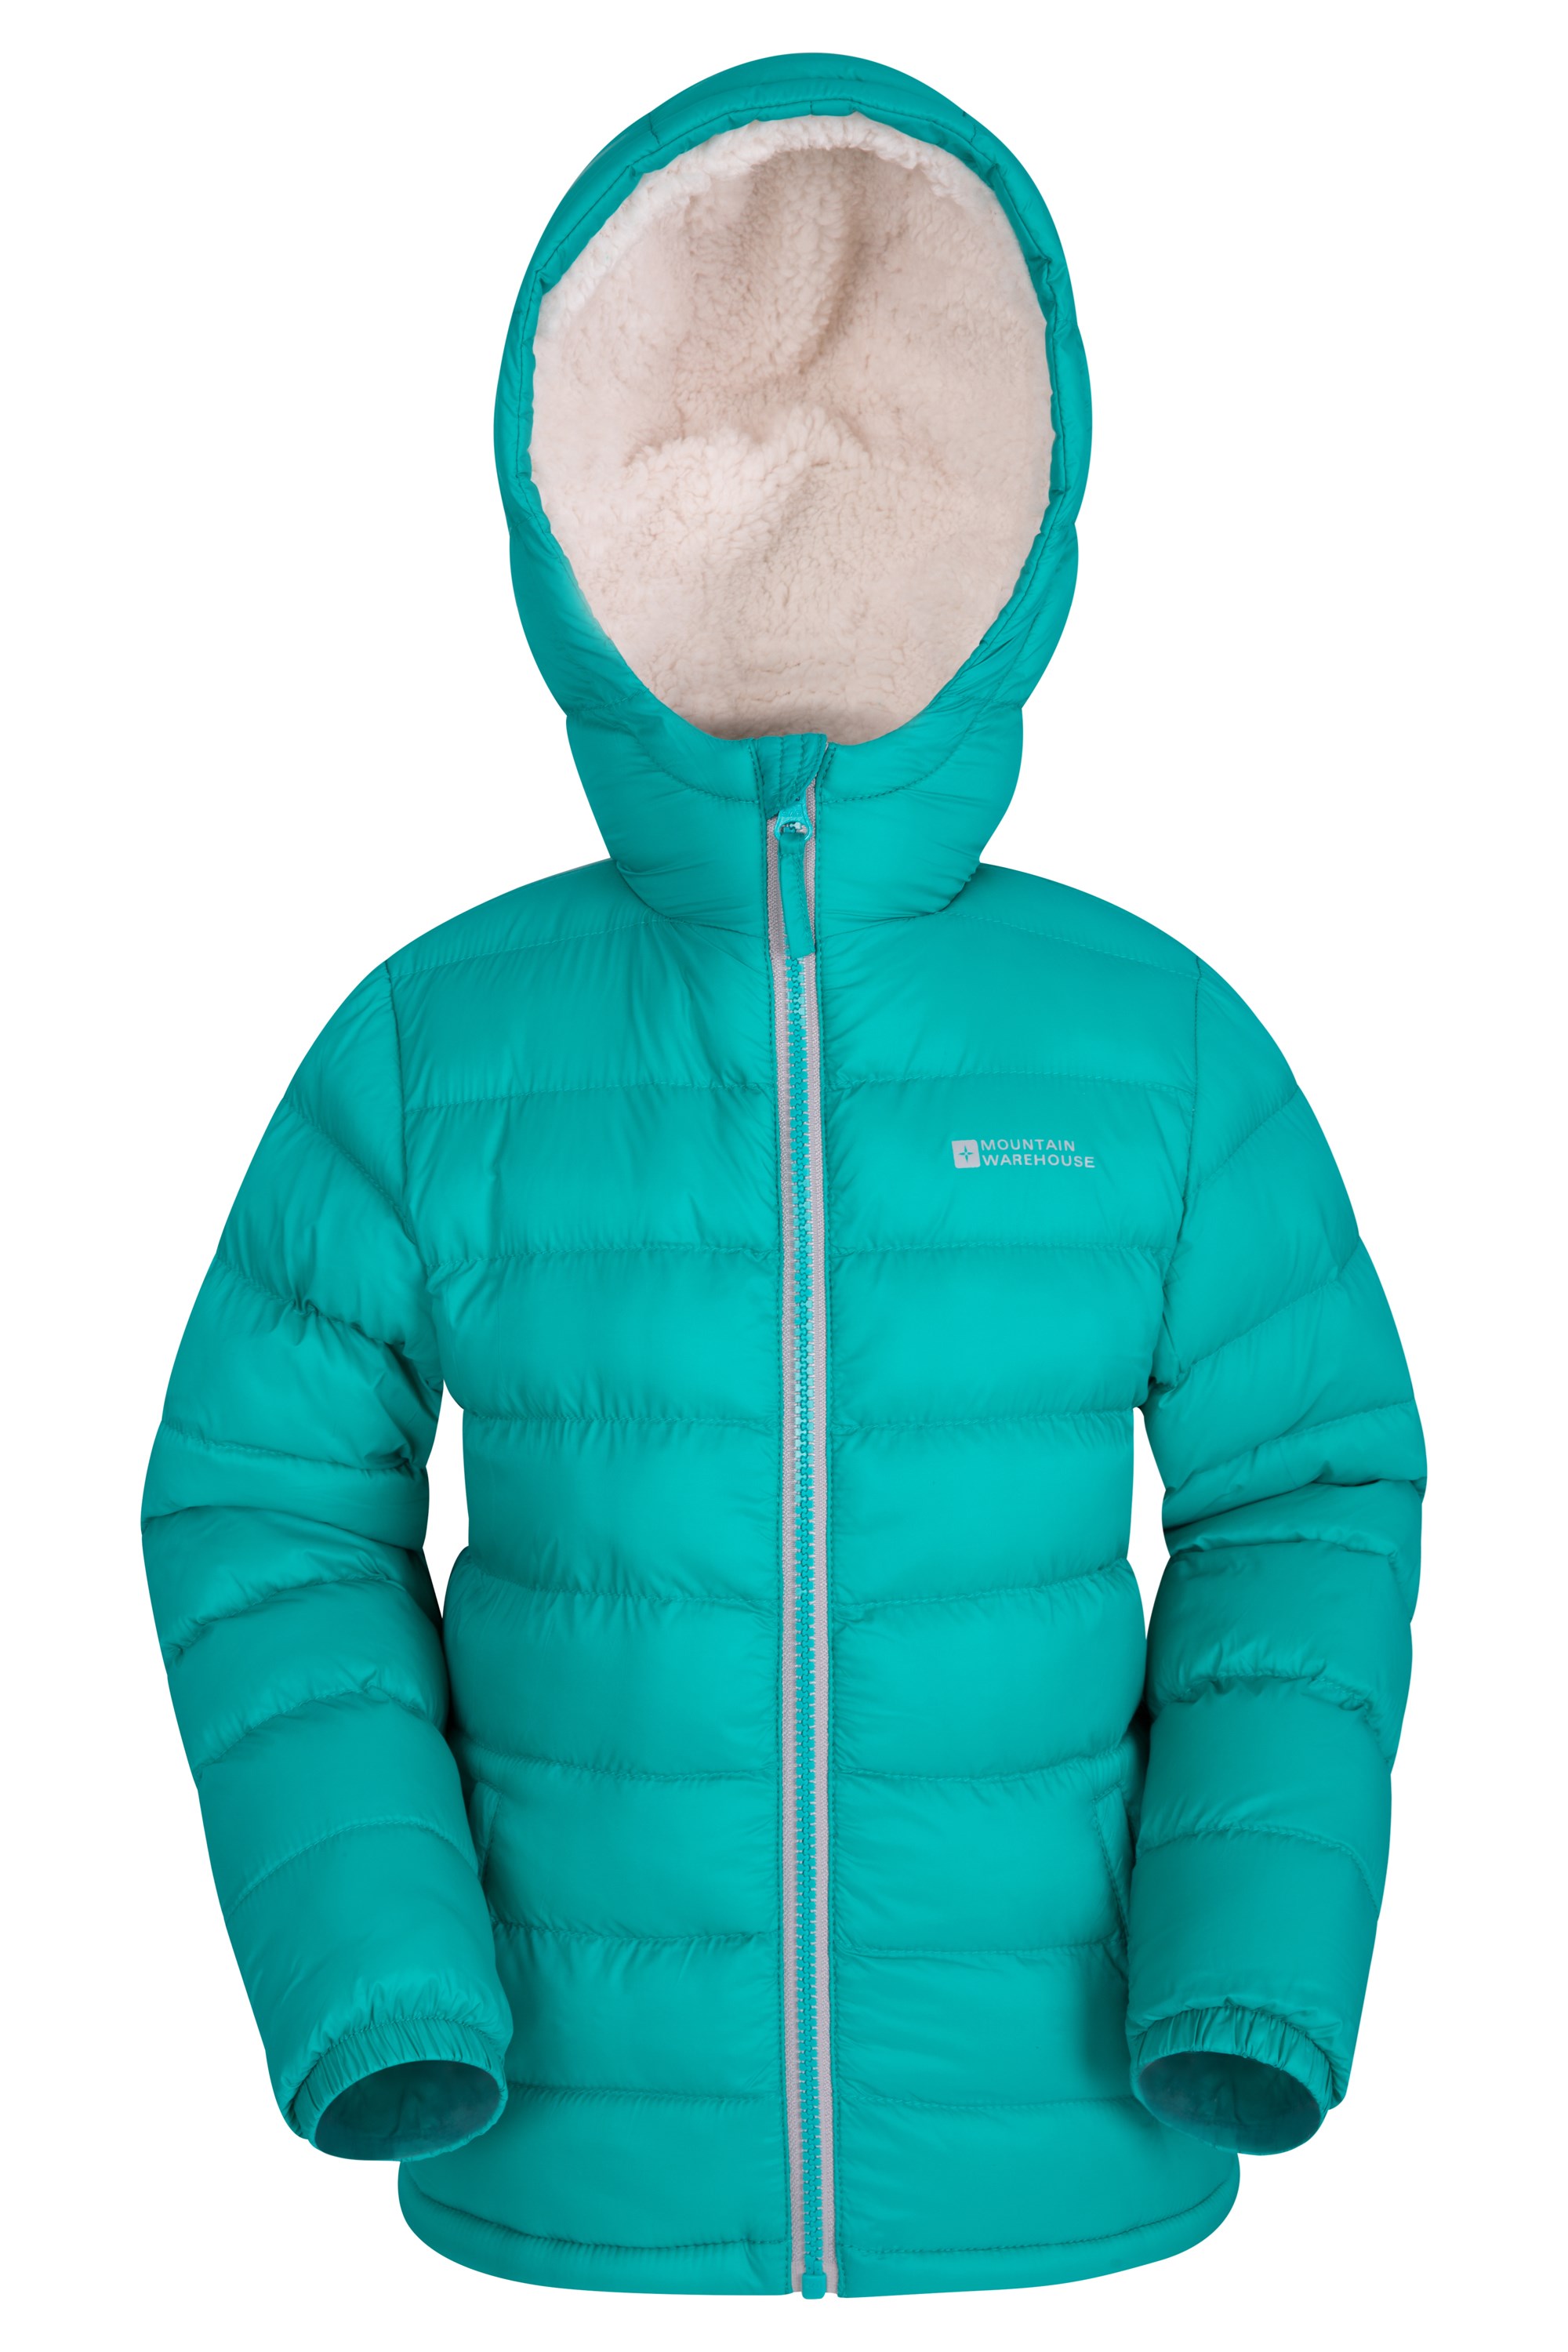 Mountain Warehouse Snowflake Kids Sherpa Lined Jacket - Green